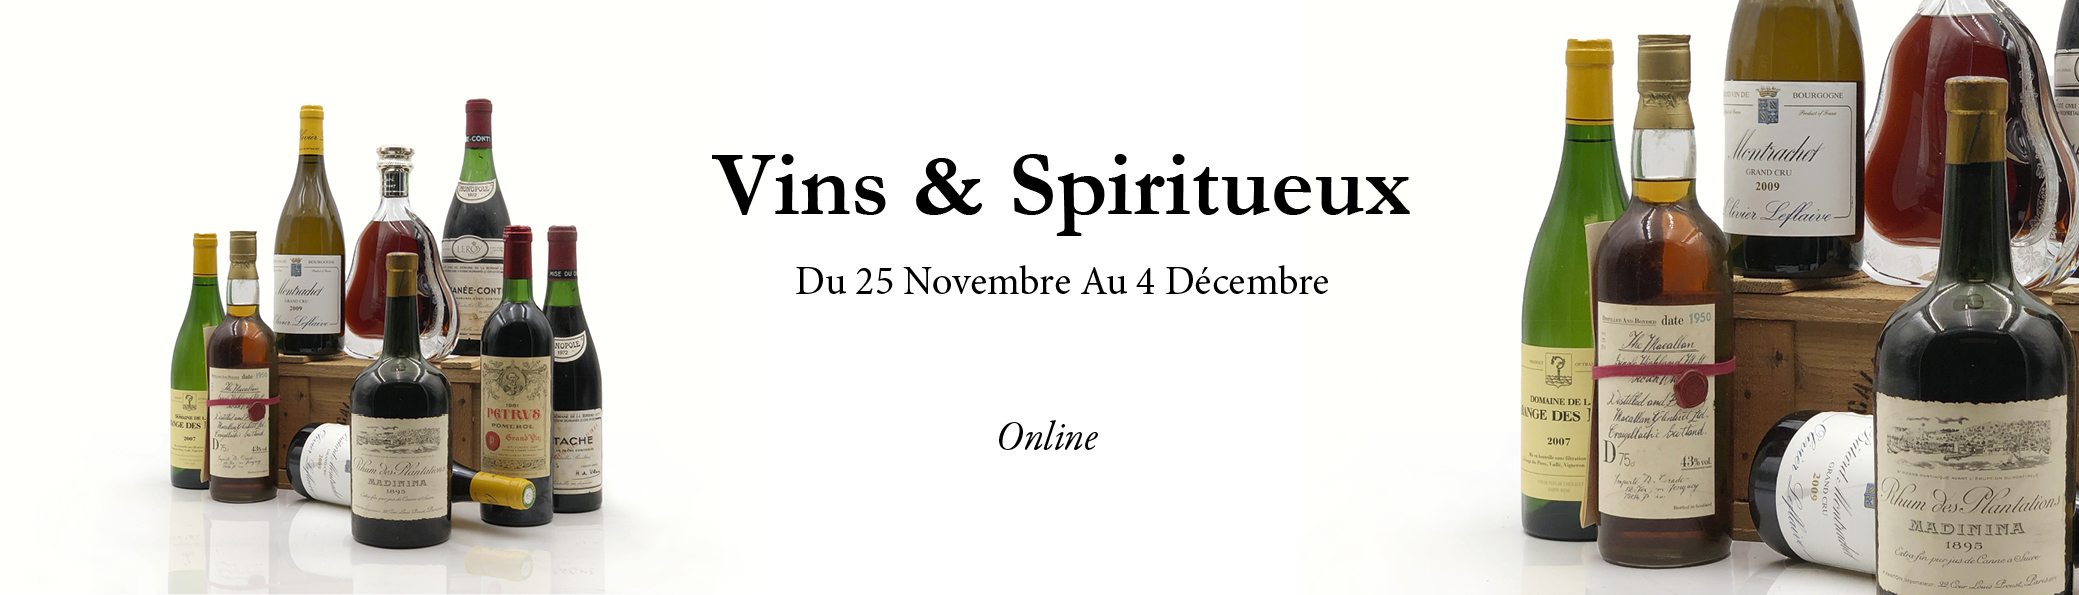 Vins & Spiritueux 